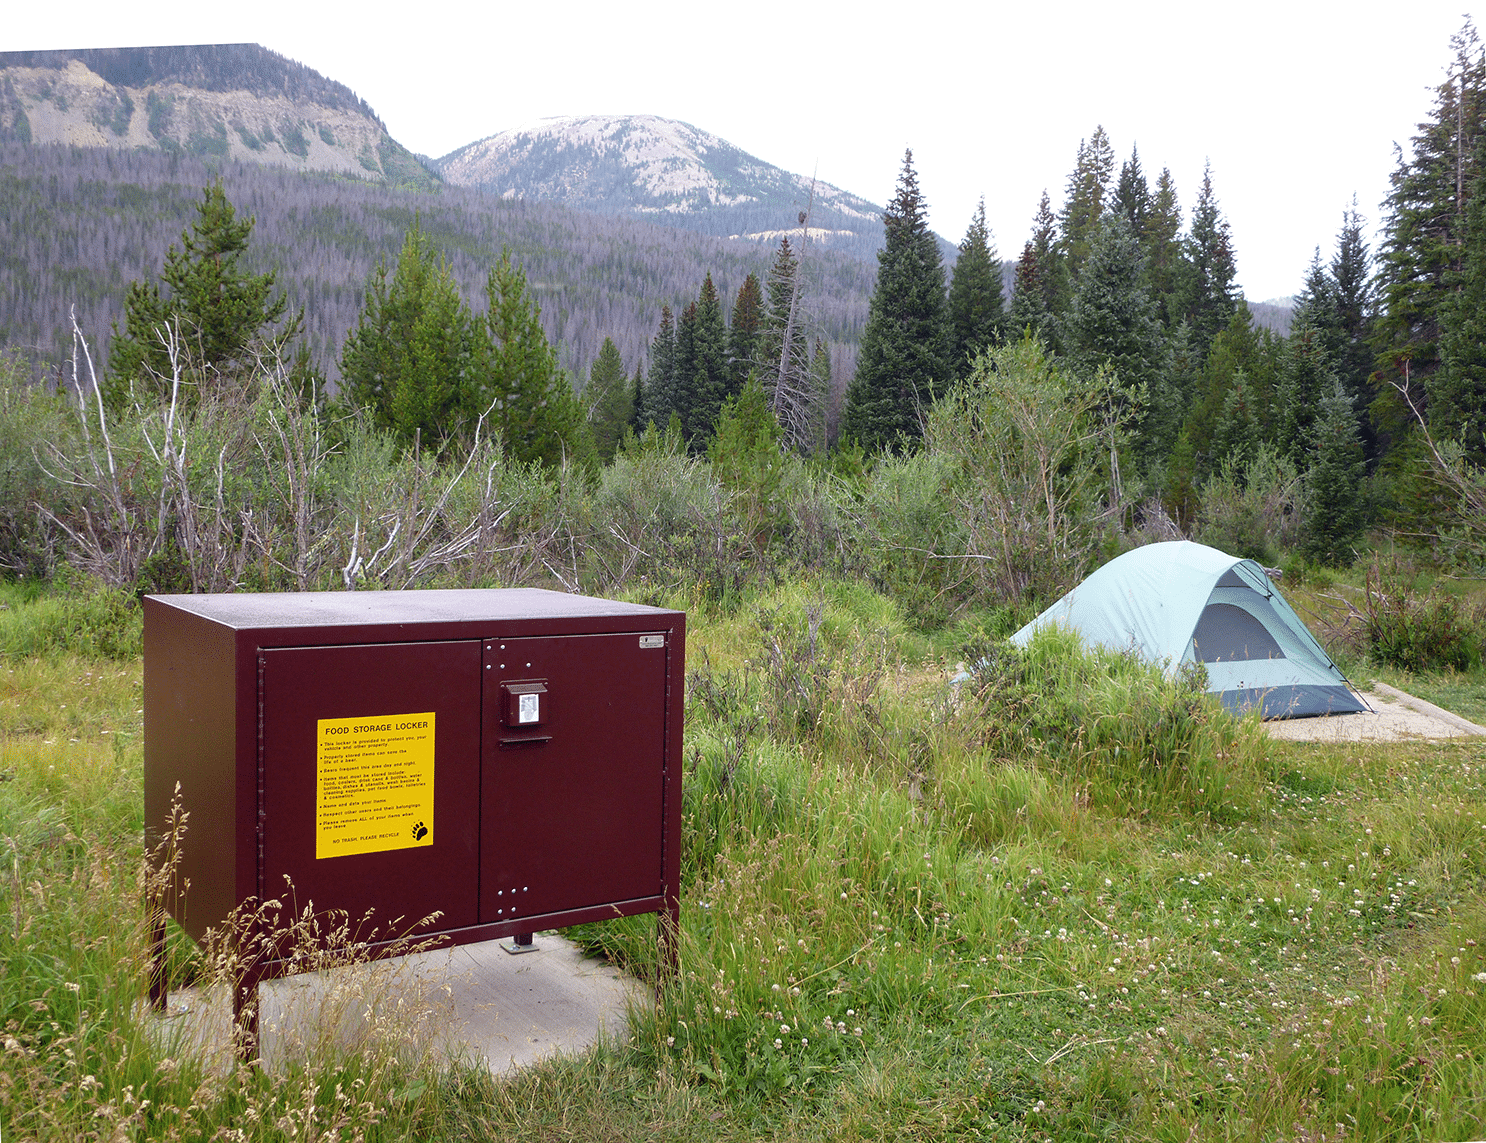 Bear box at Timber creek in RMNP.